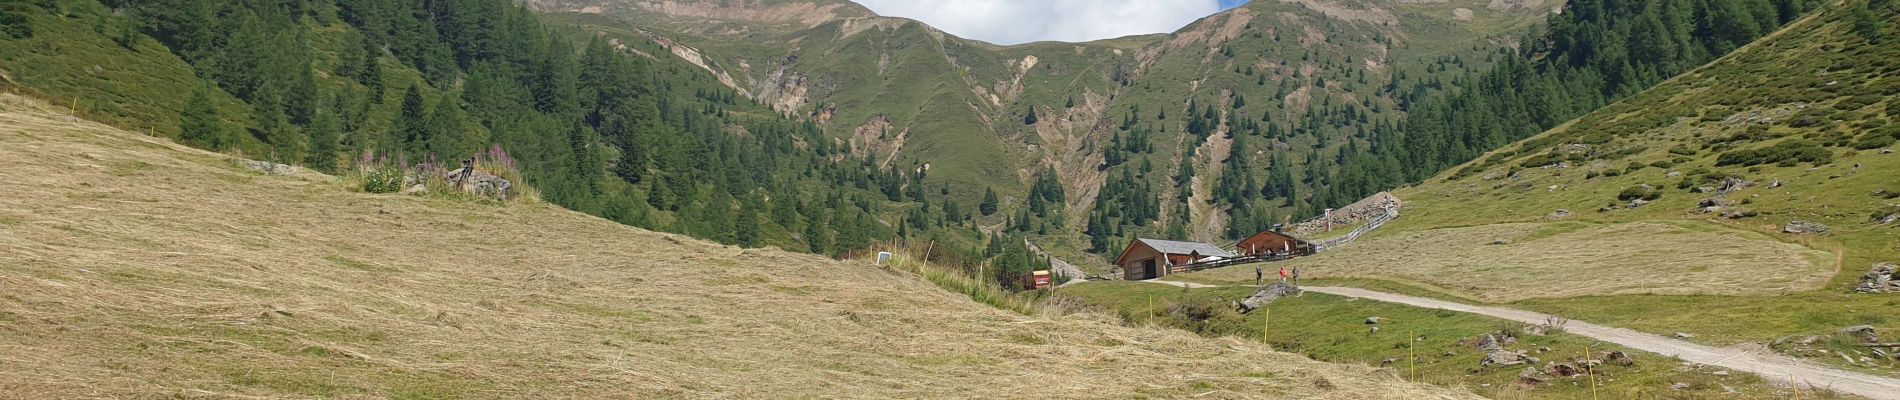 Randonnée Marche Toblach - Dobbiaco - Silverstertal - Valle San Silvestro - Photo